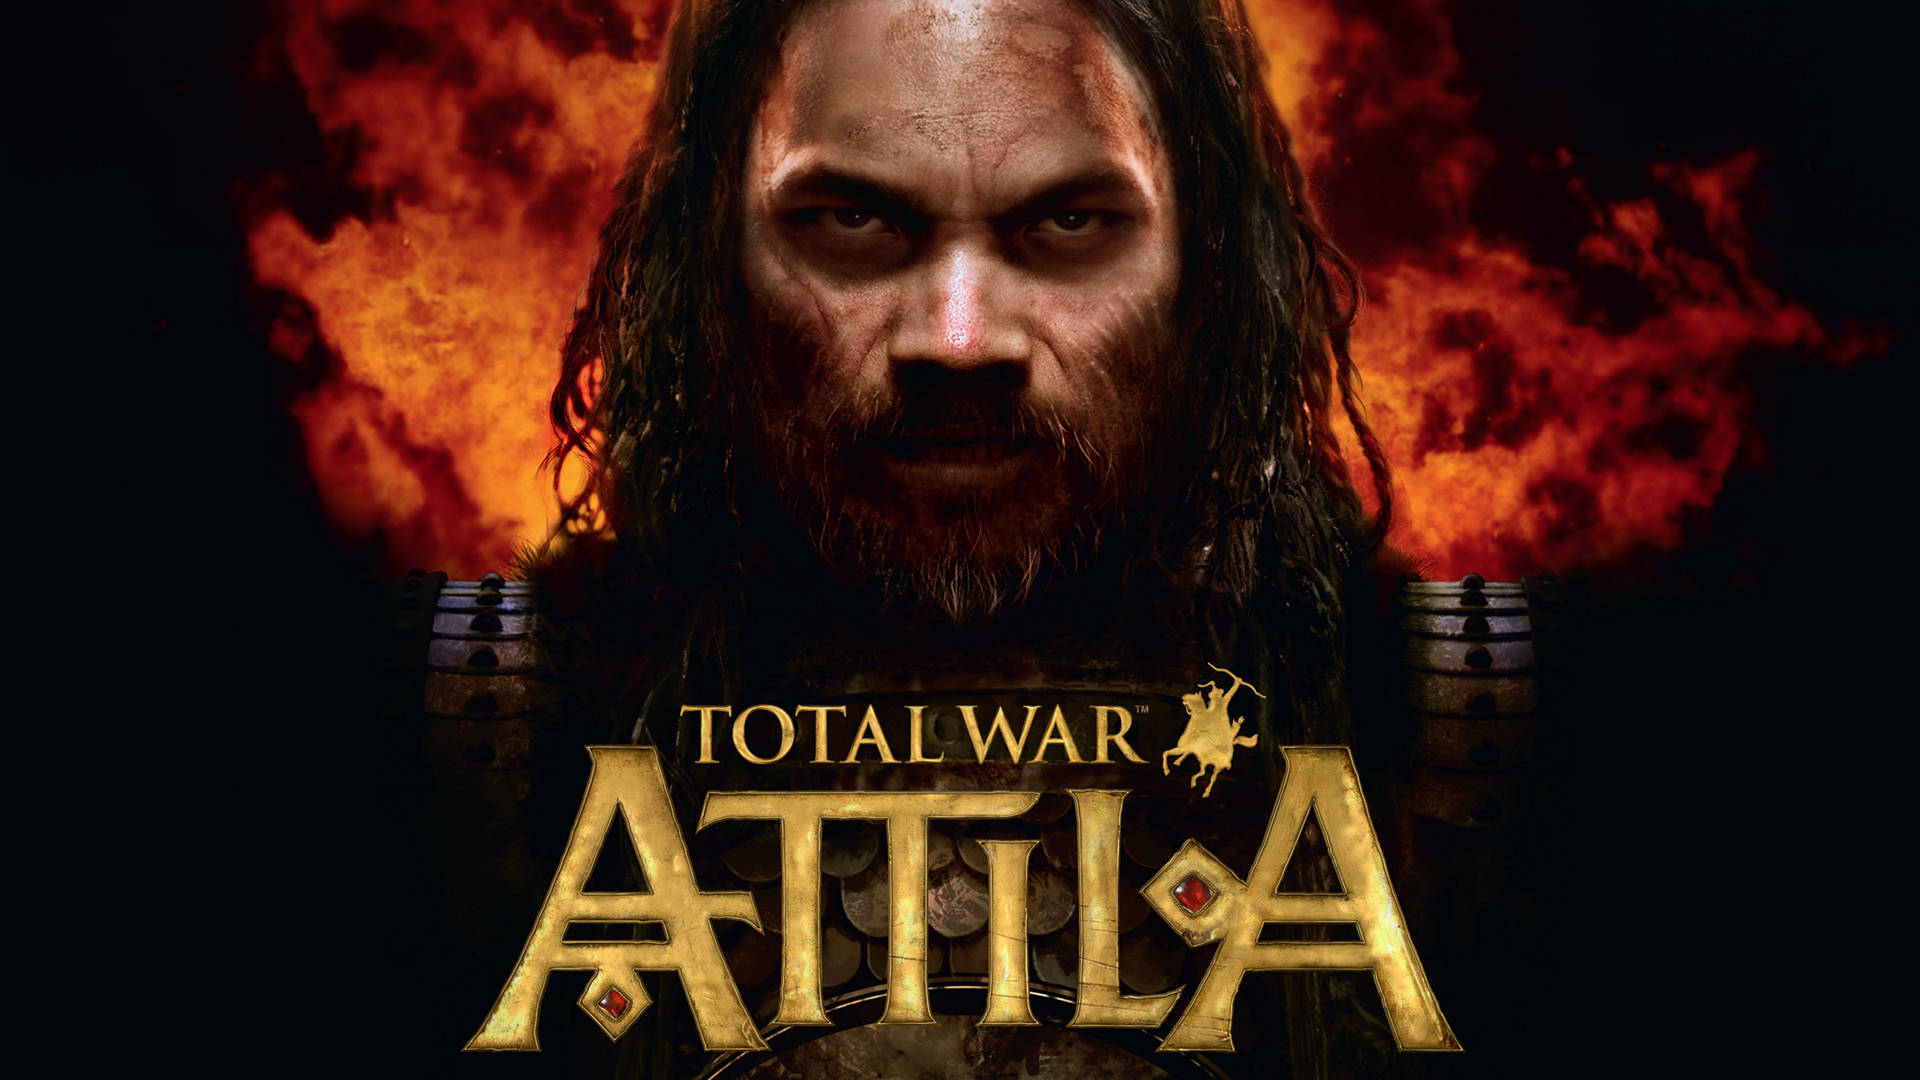 Total War Attila Game Poster Wallpaper